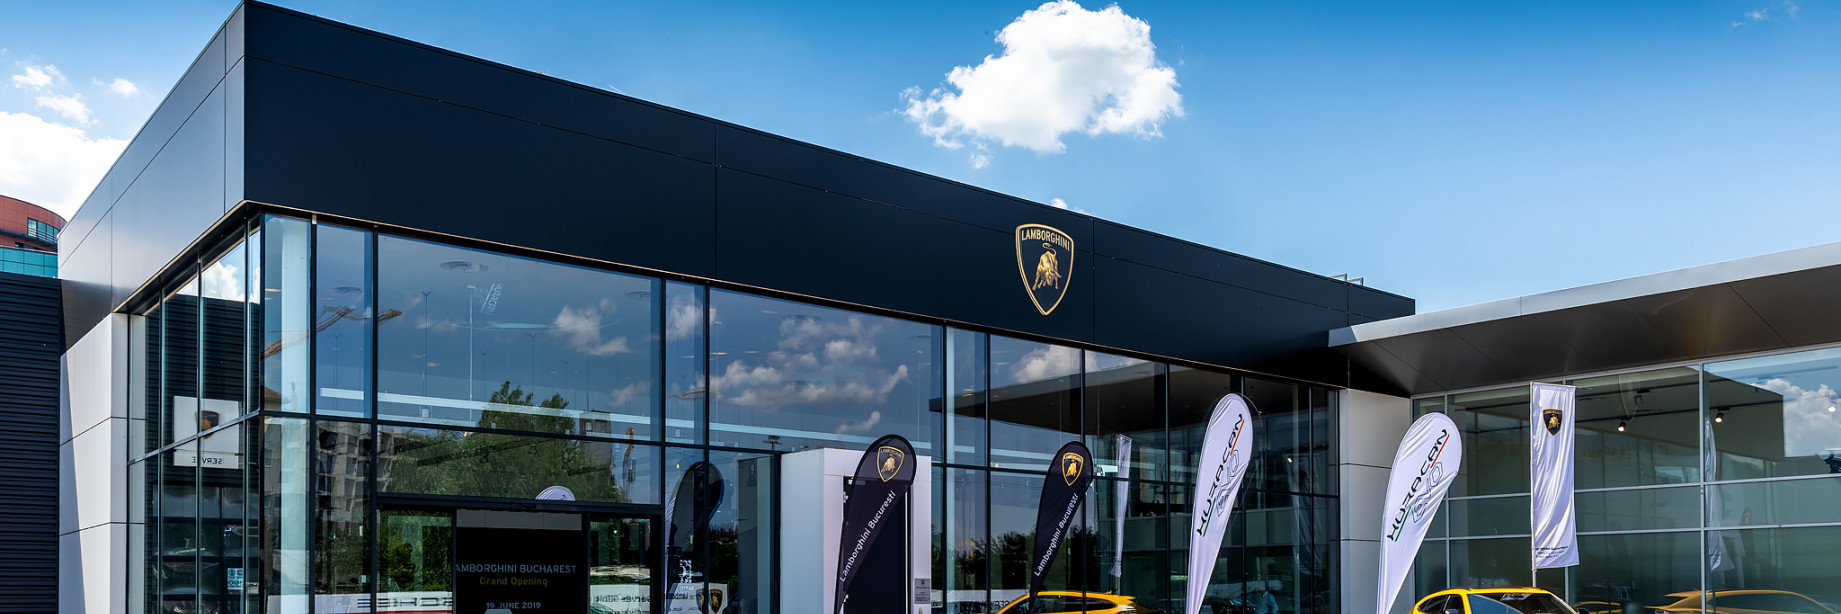 Deschidere oficiala showroom Lamborghini Bucuresti